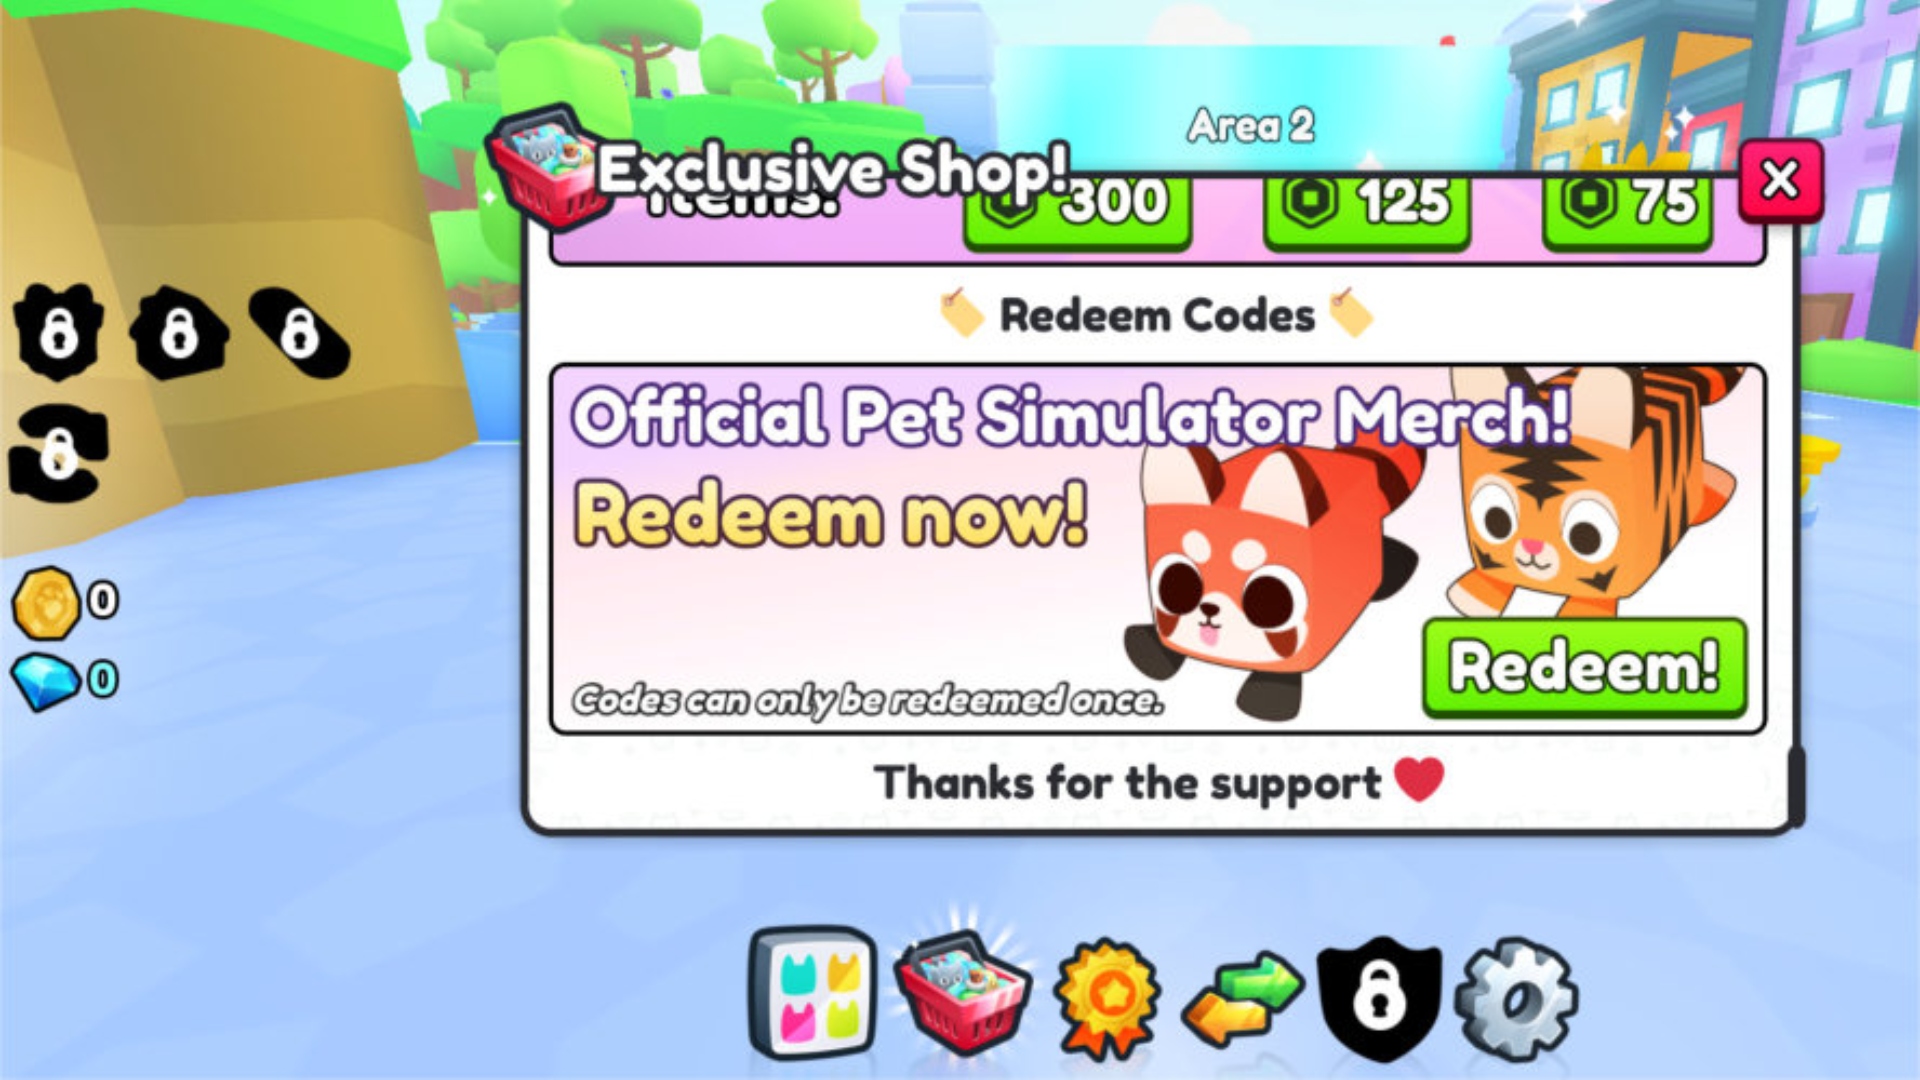 Pet Simulator 99 codes December 2023